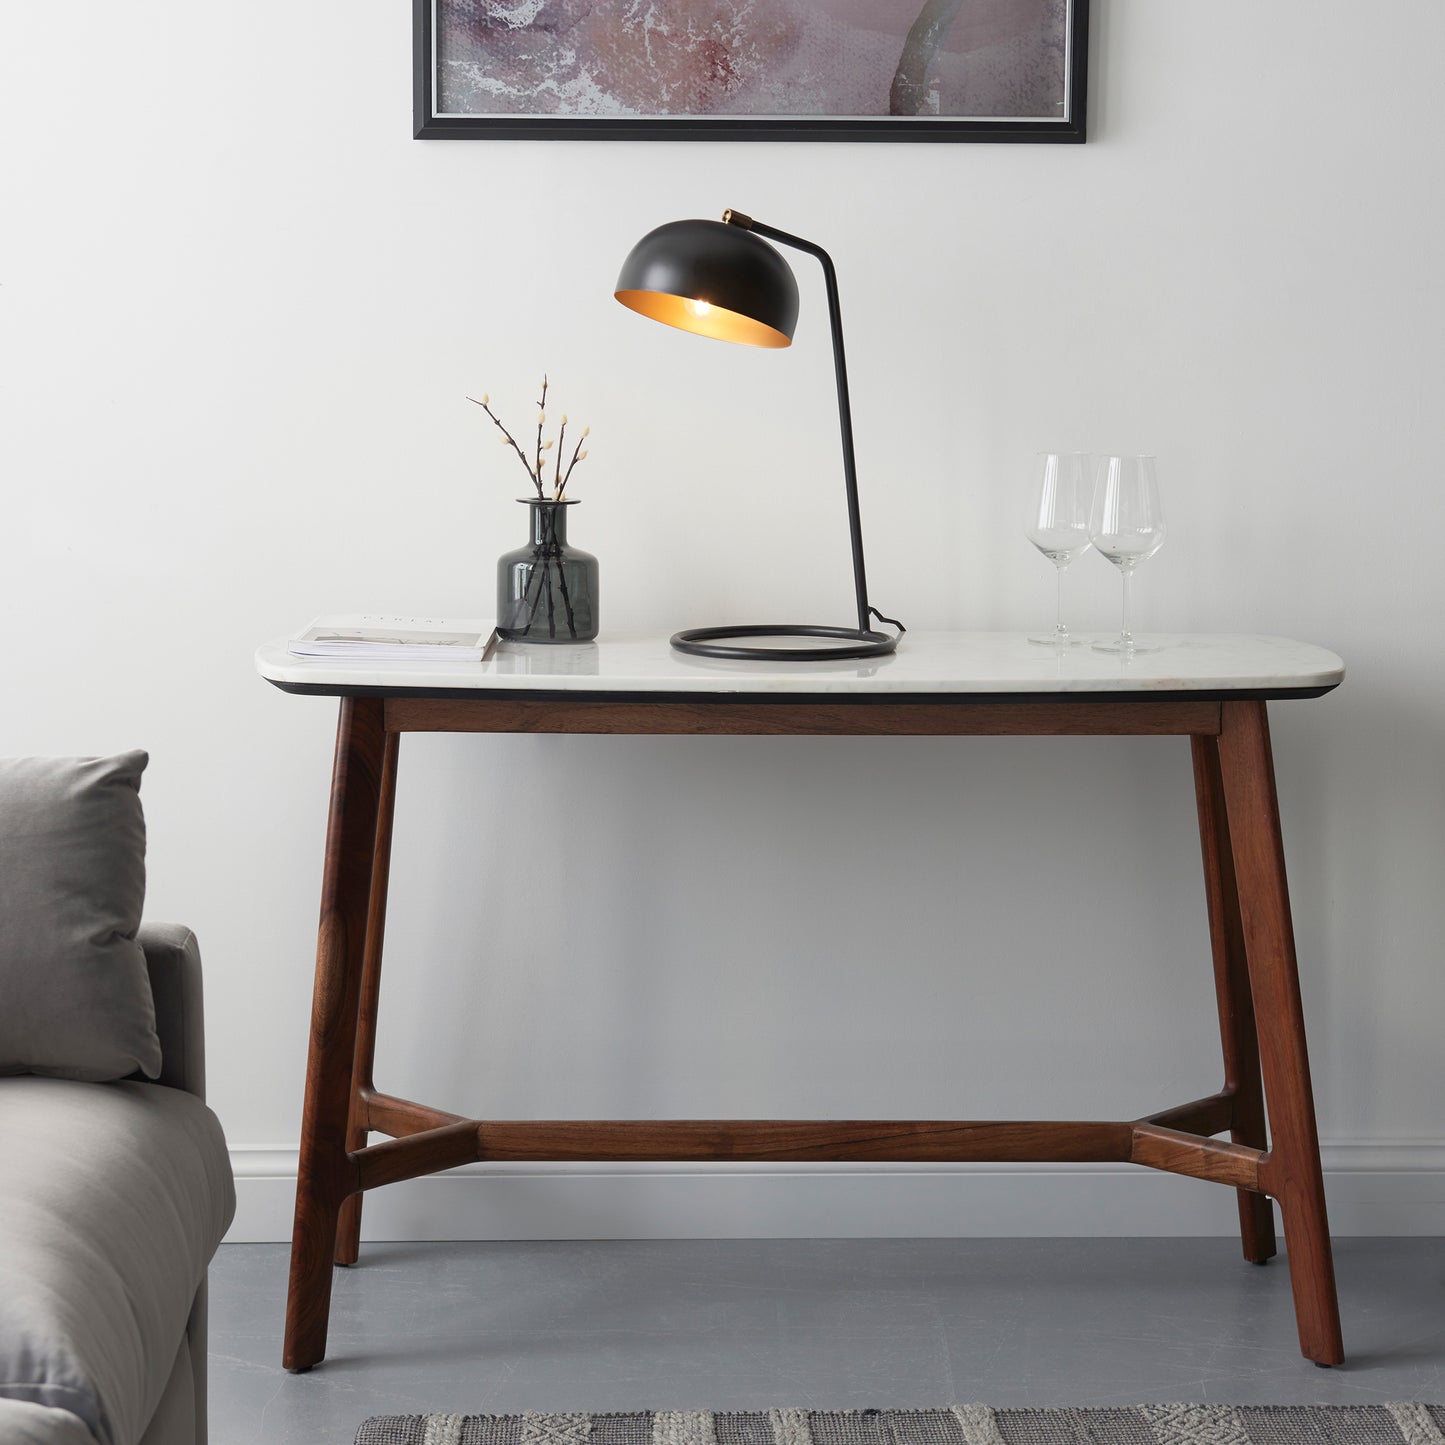 A Diptford 1 Table Light Matt Black from Kikiathome.co.uk, a stylish interior decor piece for home furniture.